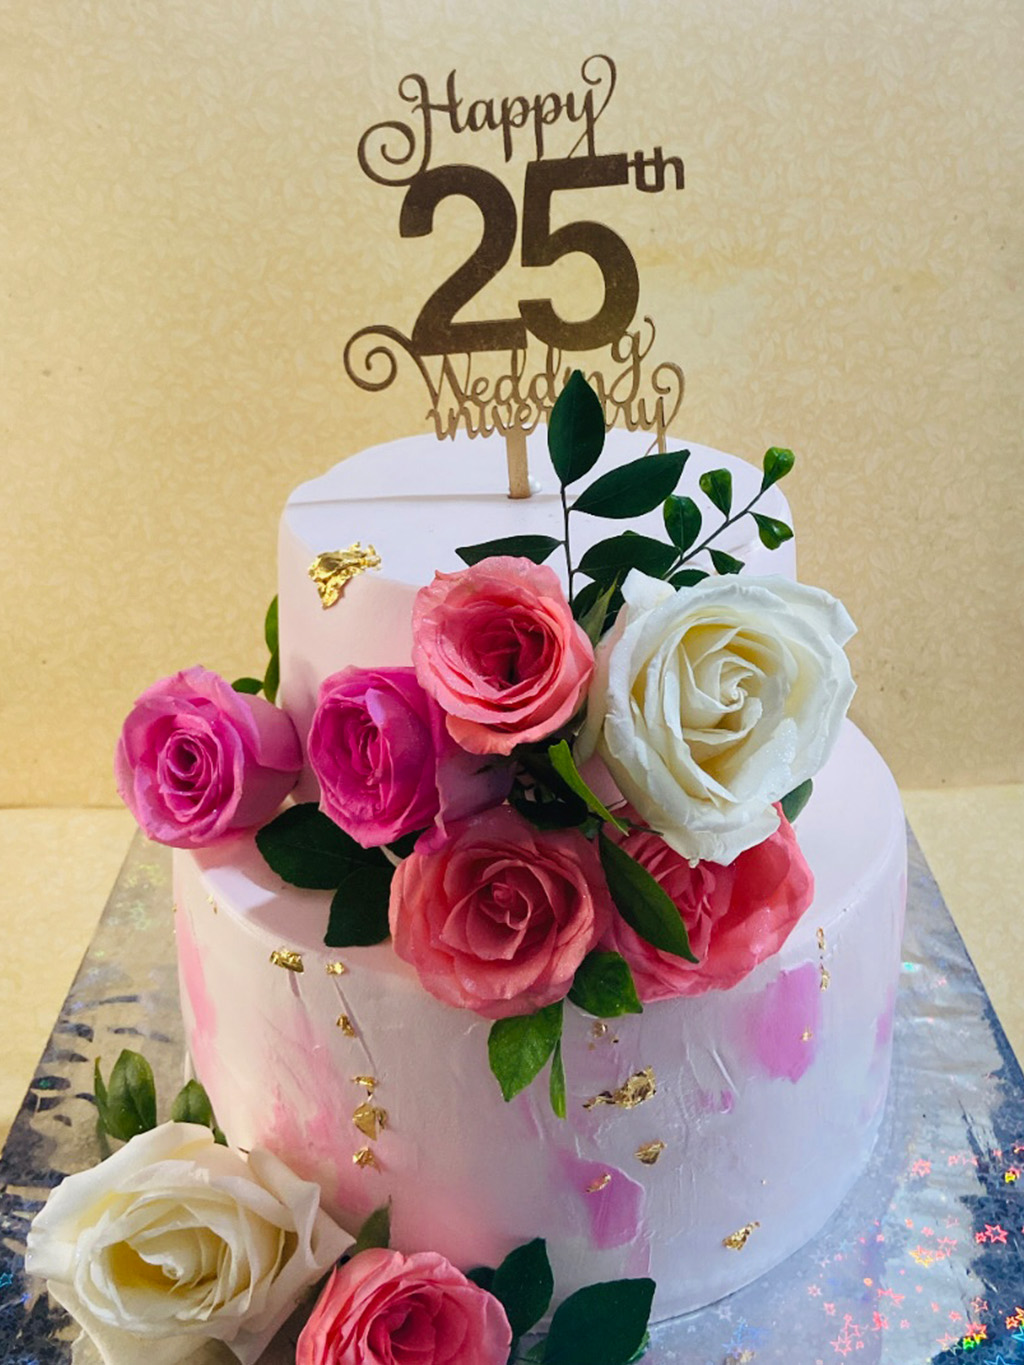 Happy 25th Anniversary Cake | Romantic Couple Cake for Anniversary ...